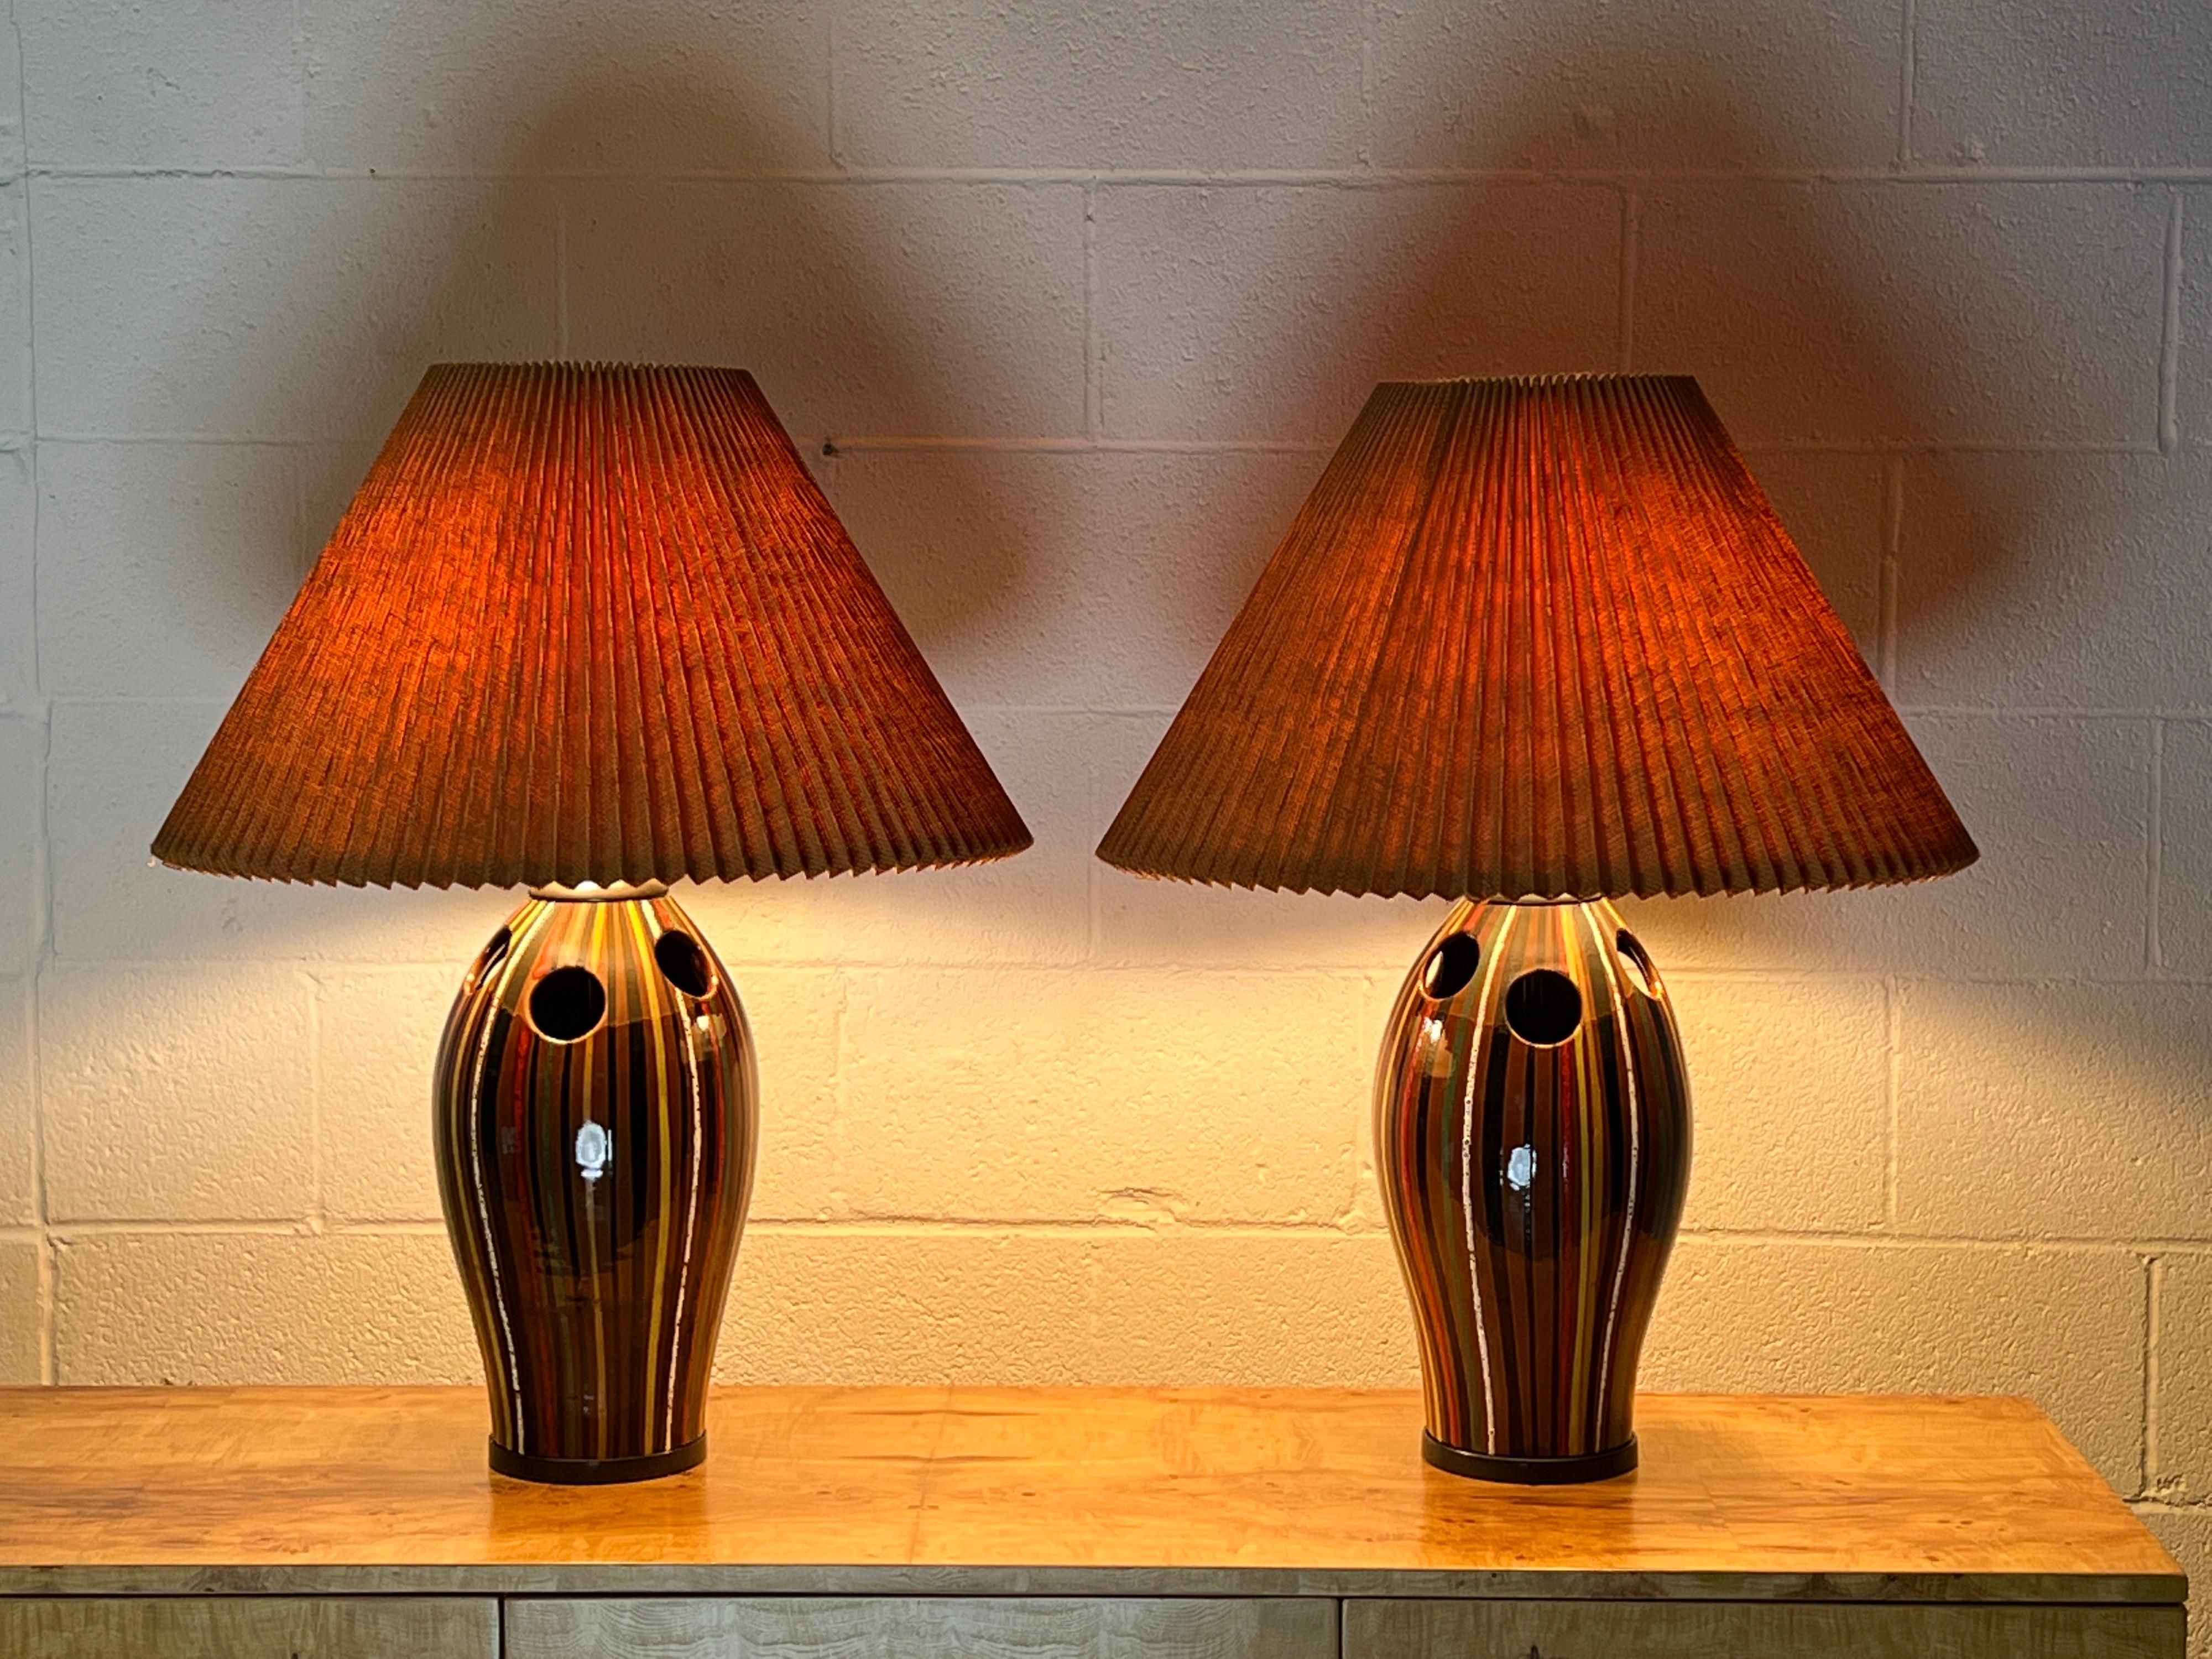 A beautiful pair of Italian Bitossi ceramic lamps with bronze hardware and original shades.